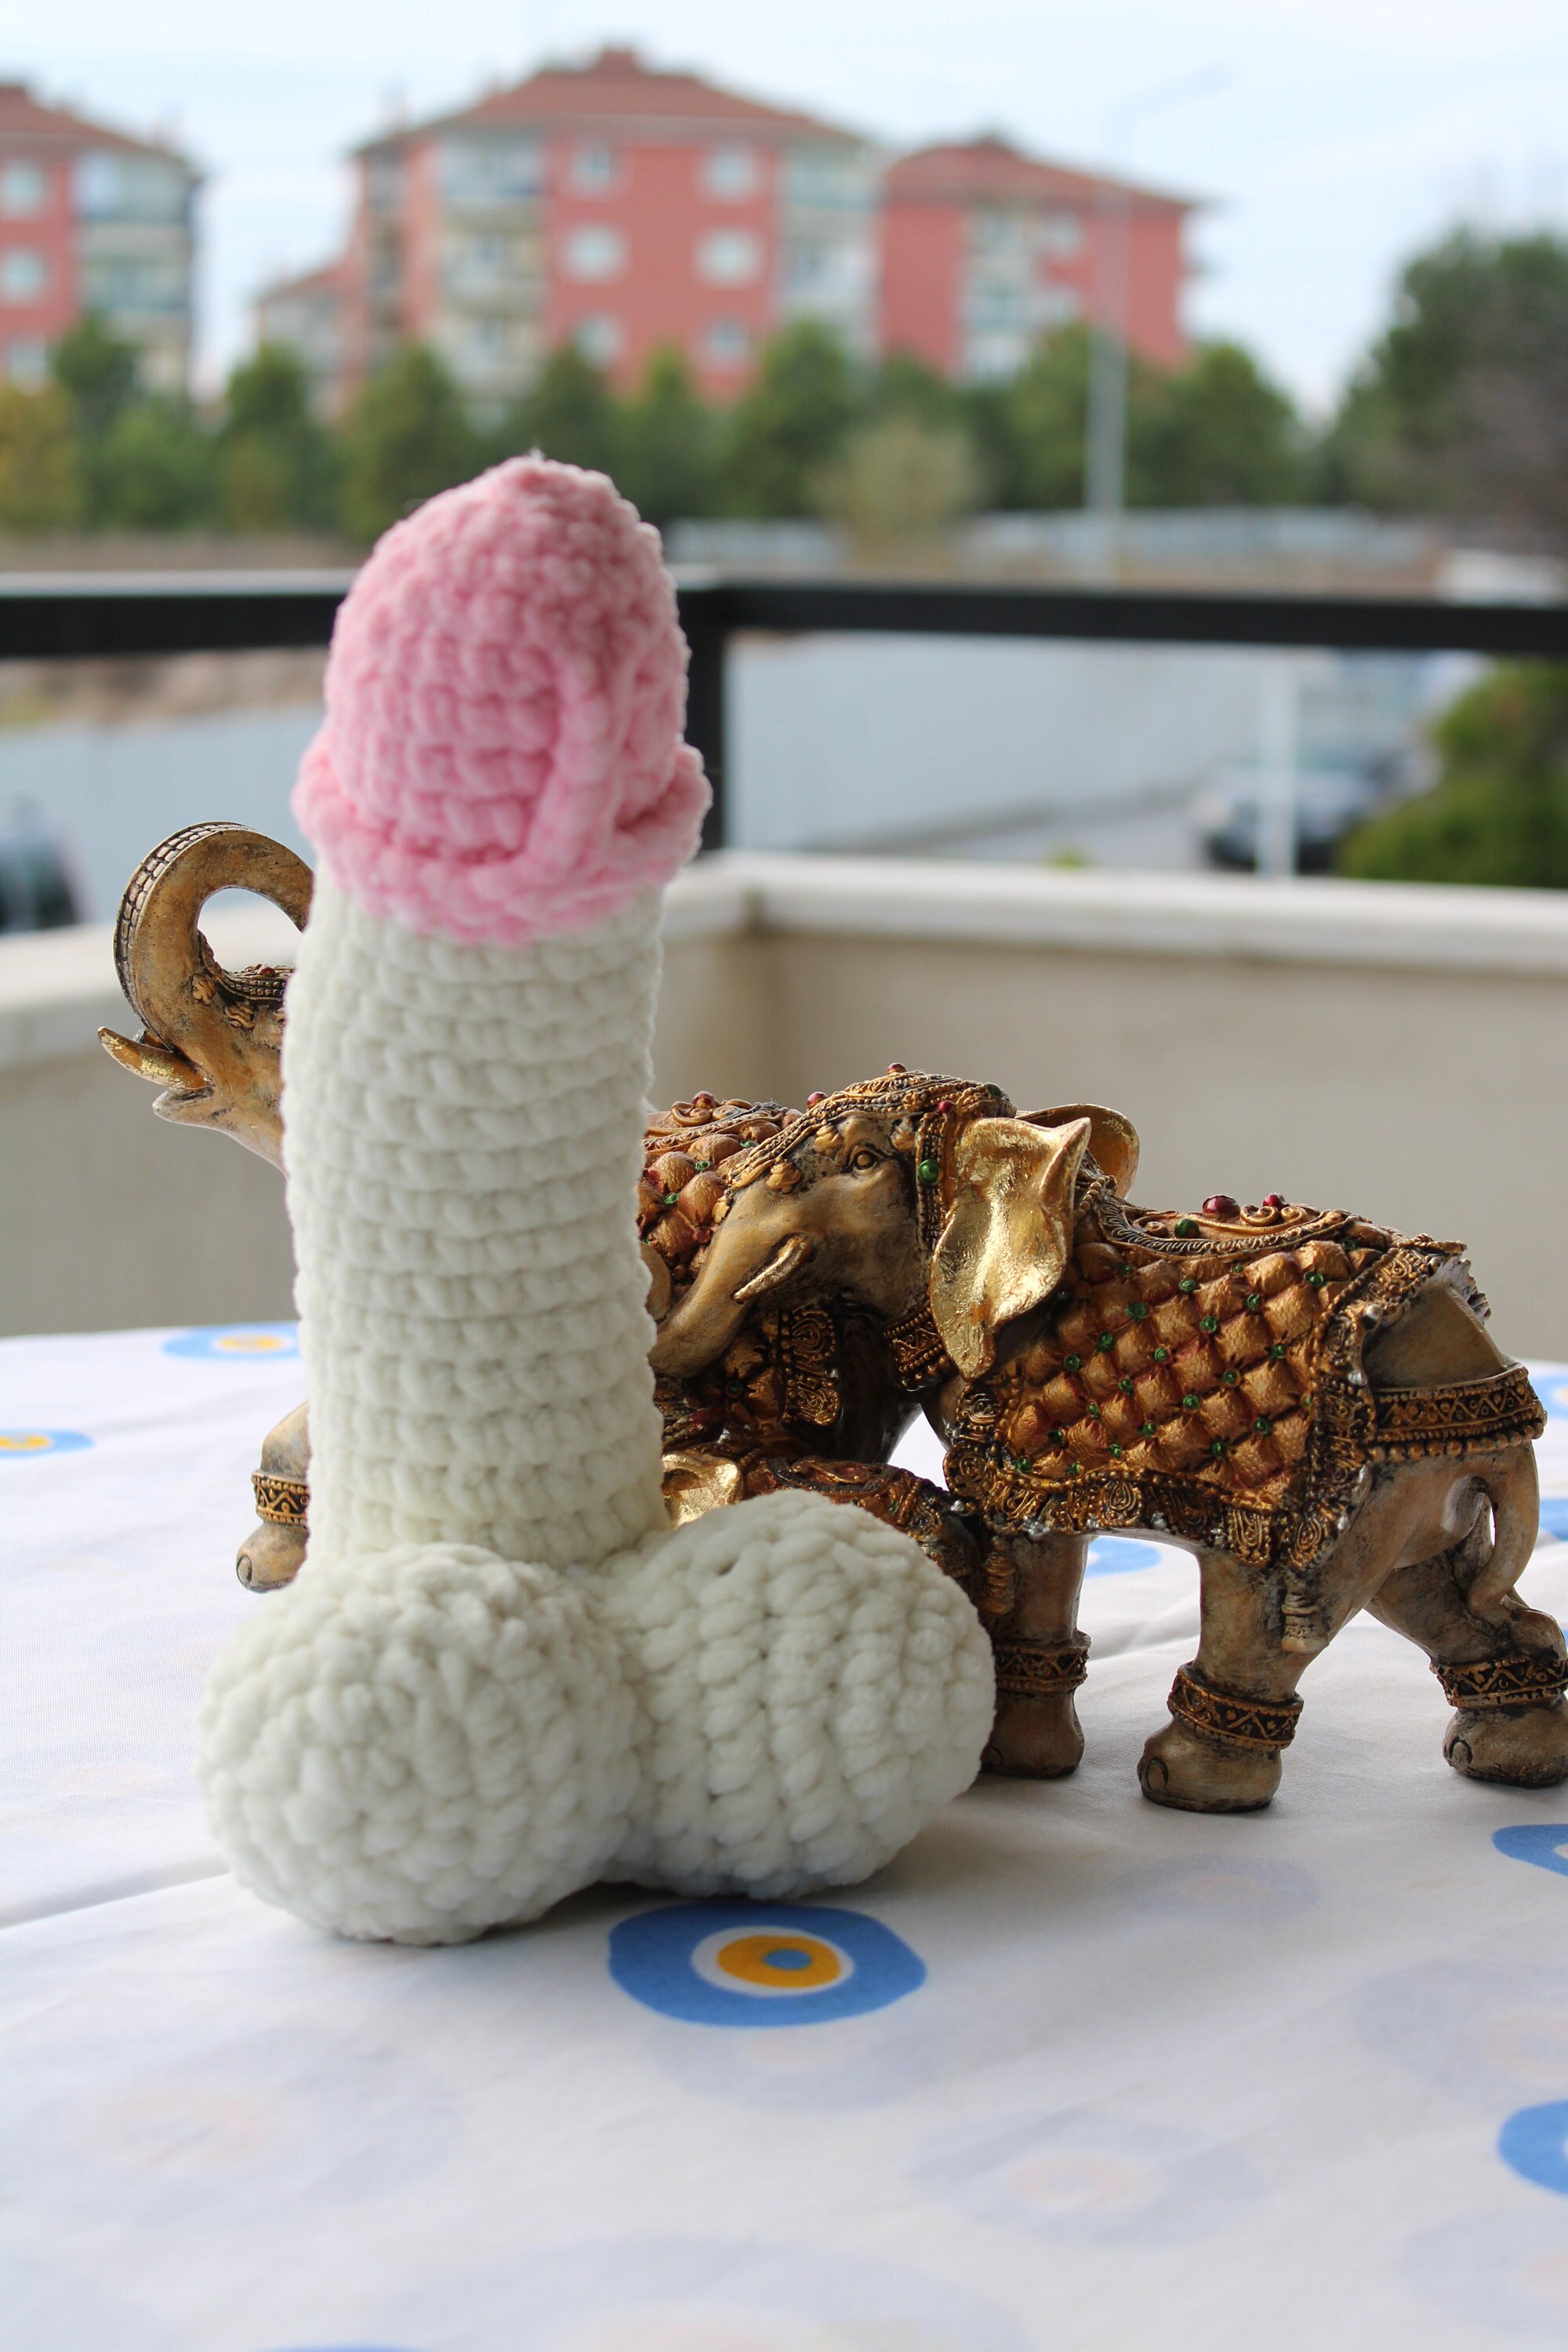 Crochet Penis, Plush Penis Toy, Crochet Personalized Dick, Adult